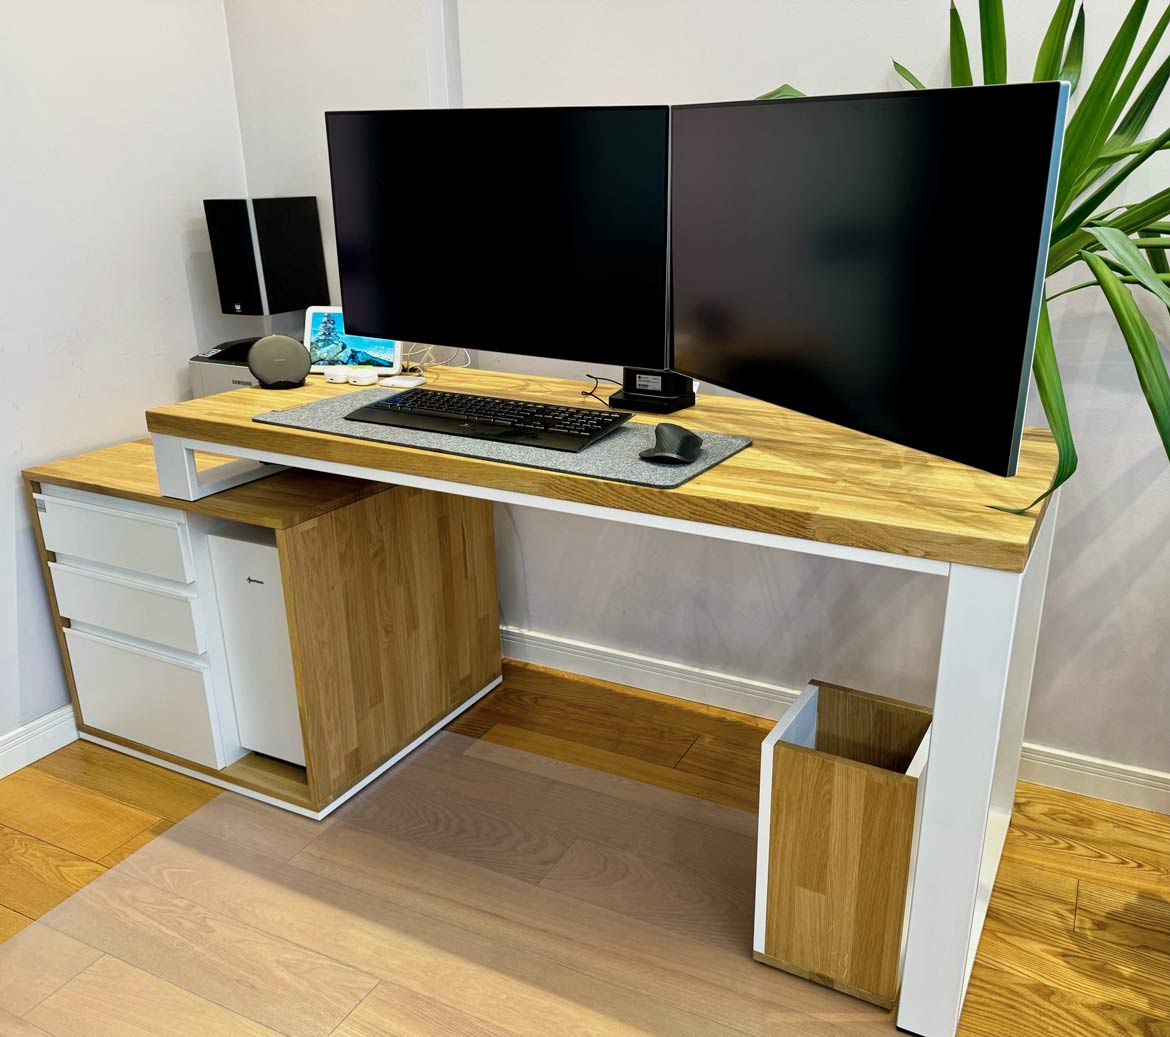 biurko gamingowe z kontenerkiem i dwoma monitorami